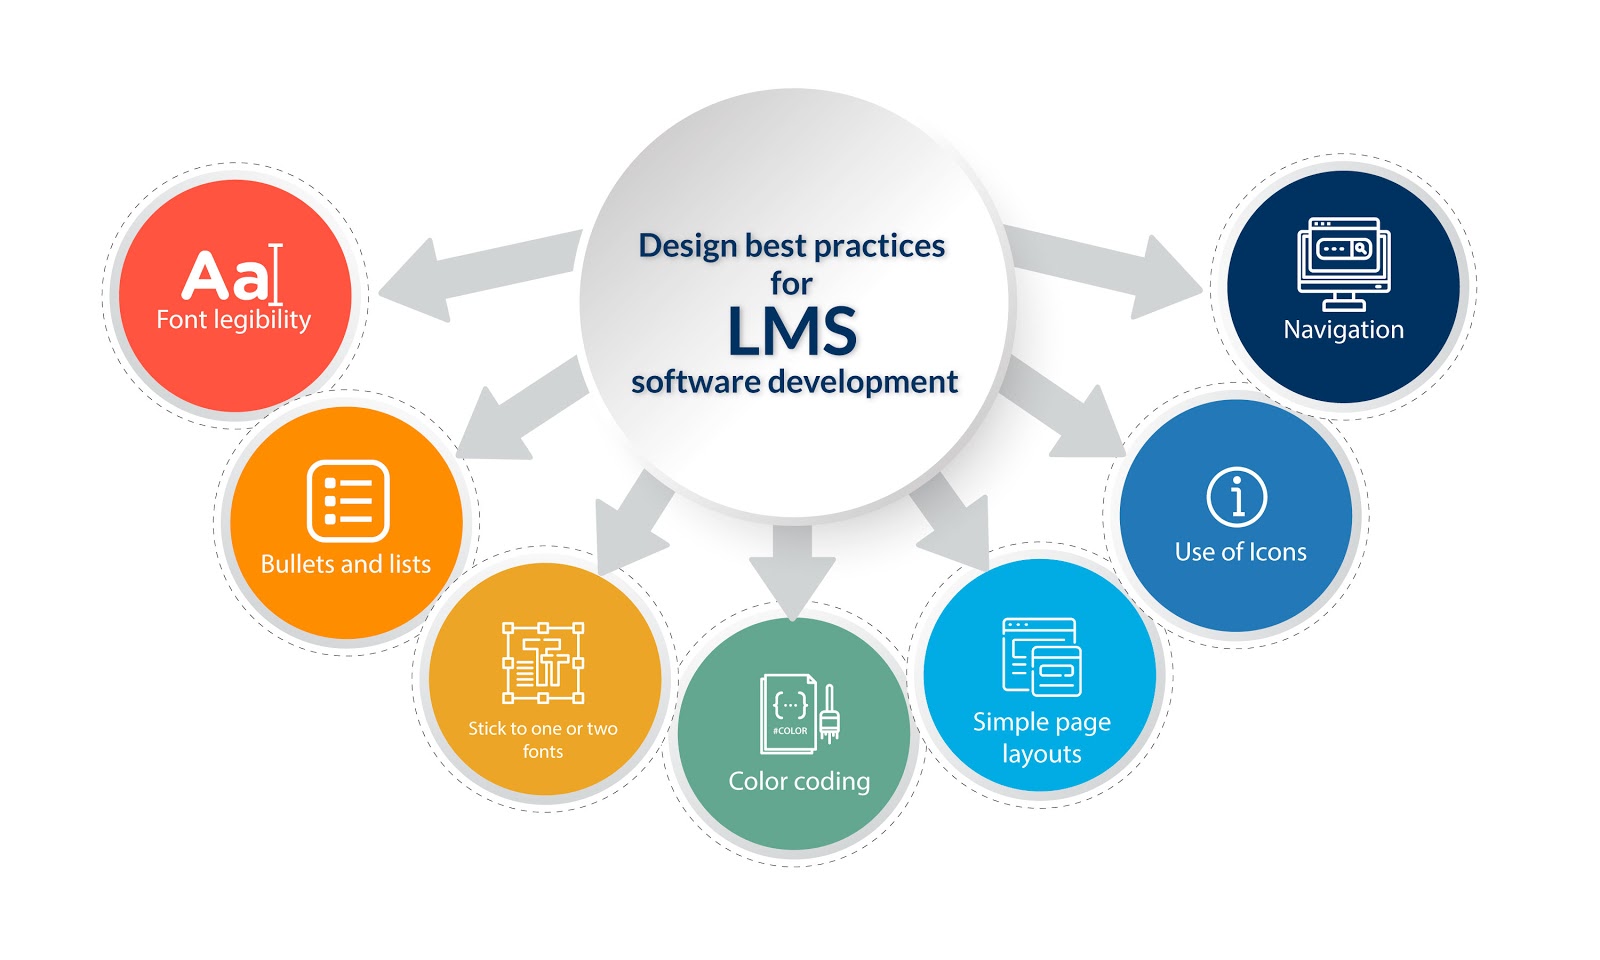 Design best practices for LMS software development